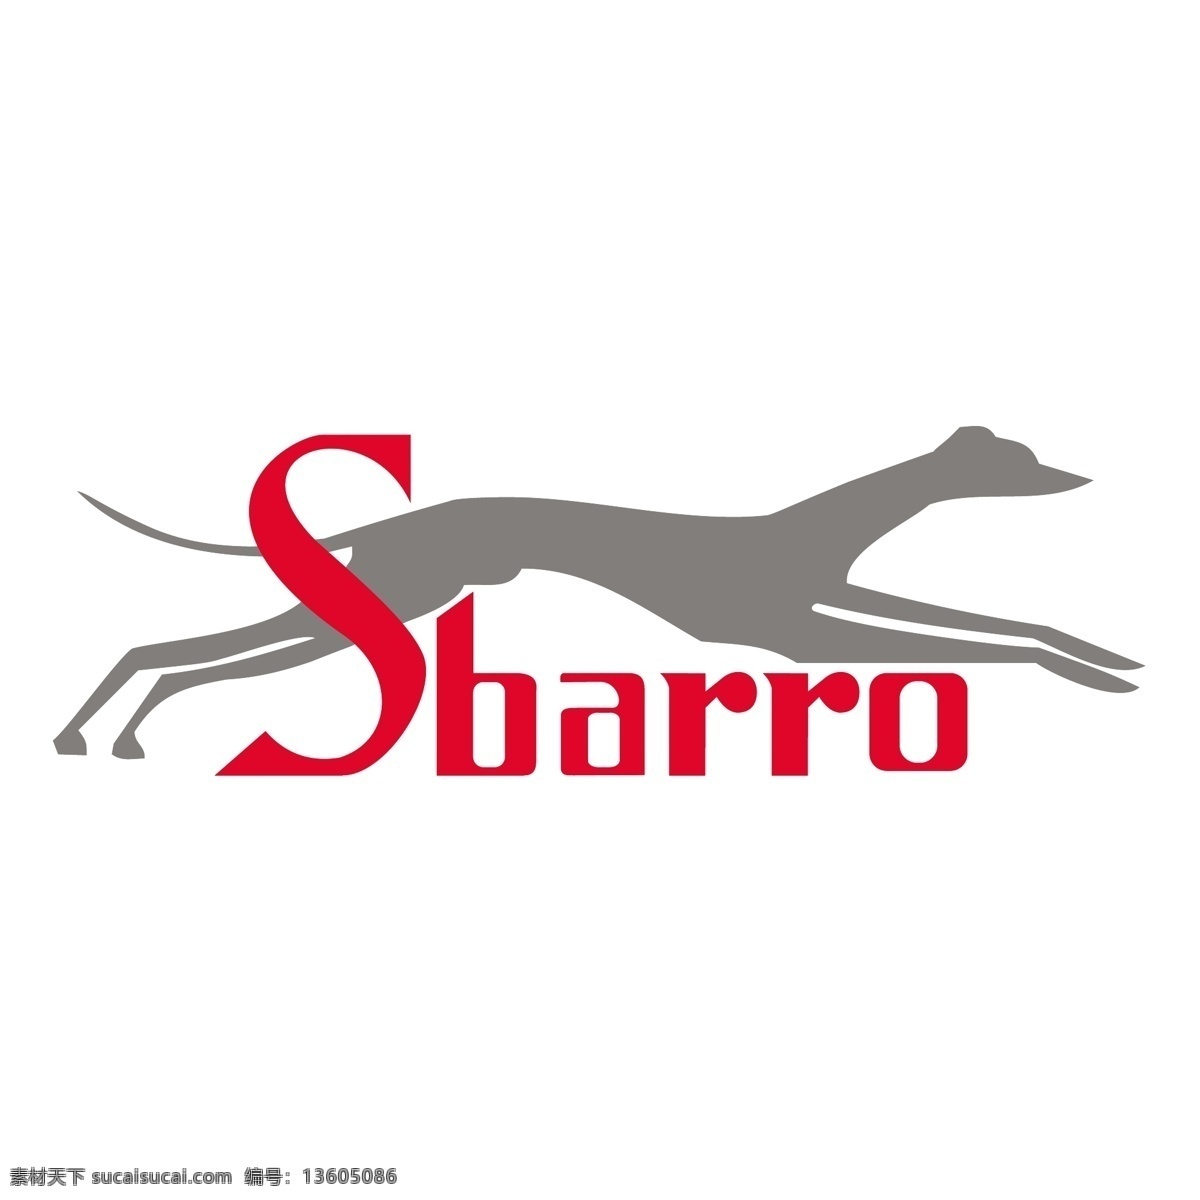 sbarro 标识 公司 免费 品牌 品牌标识 商标 矢量标志下载 免费矢量标识 矢量 psd源文件 logo设计